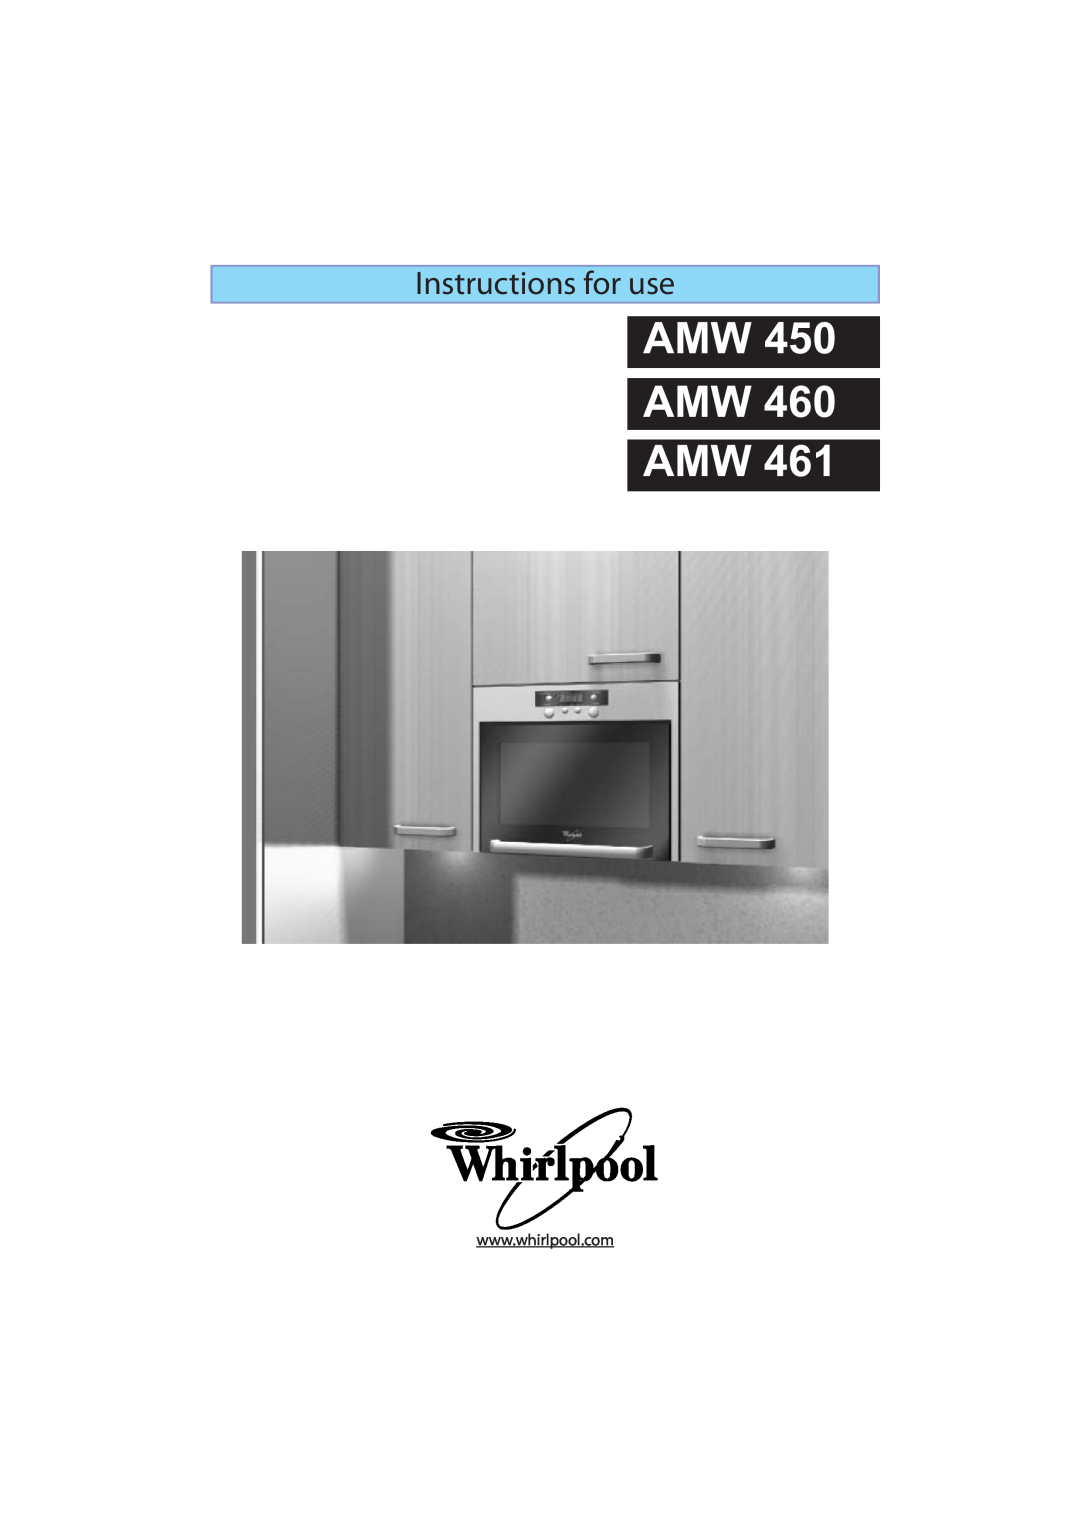 Whirlpool AMW 450, AMW 460, AMW 461 manual Amw Amw Amw, Instructions for use 